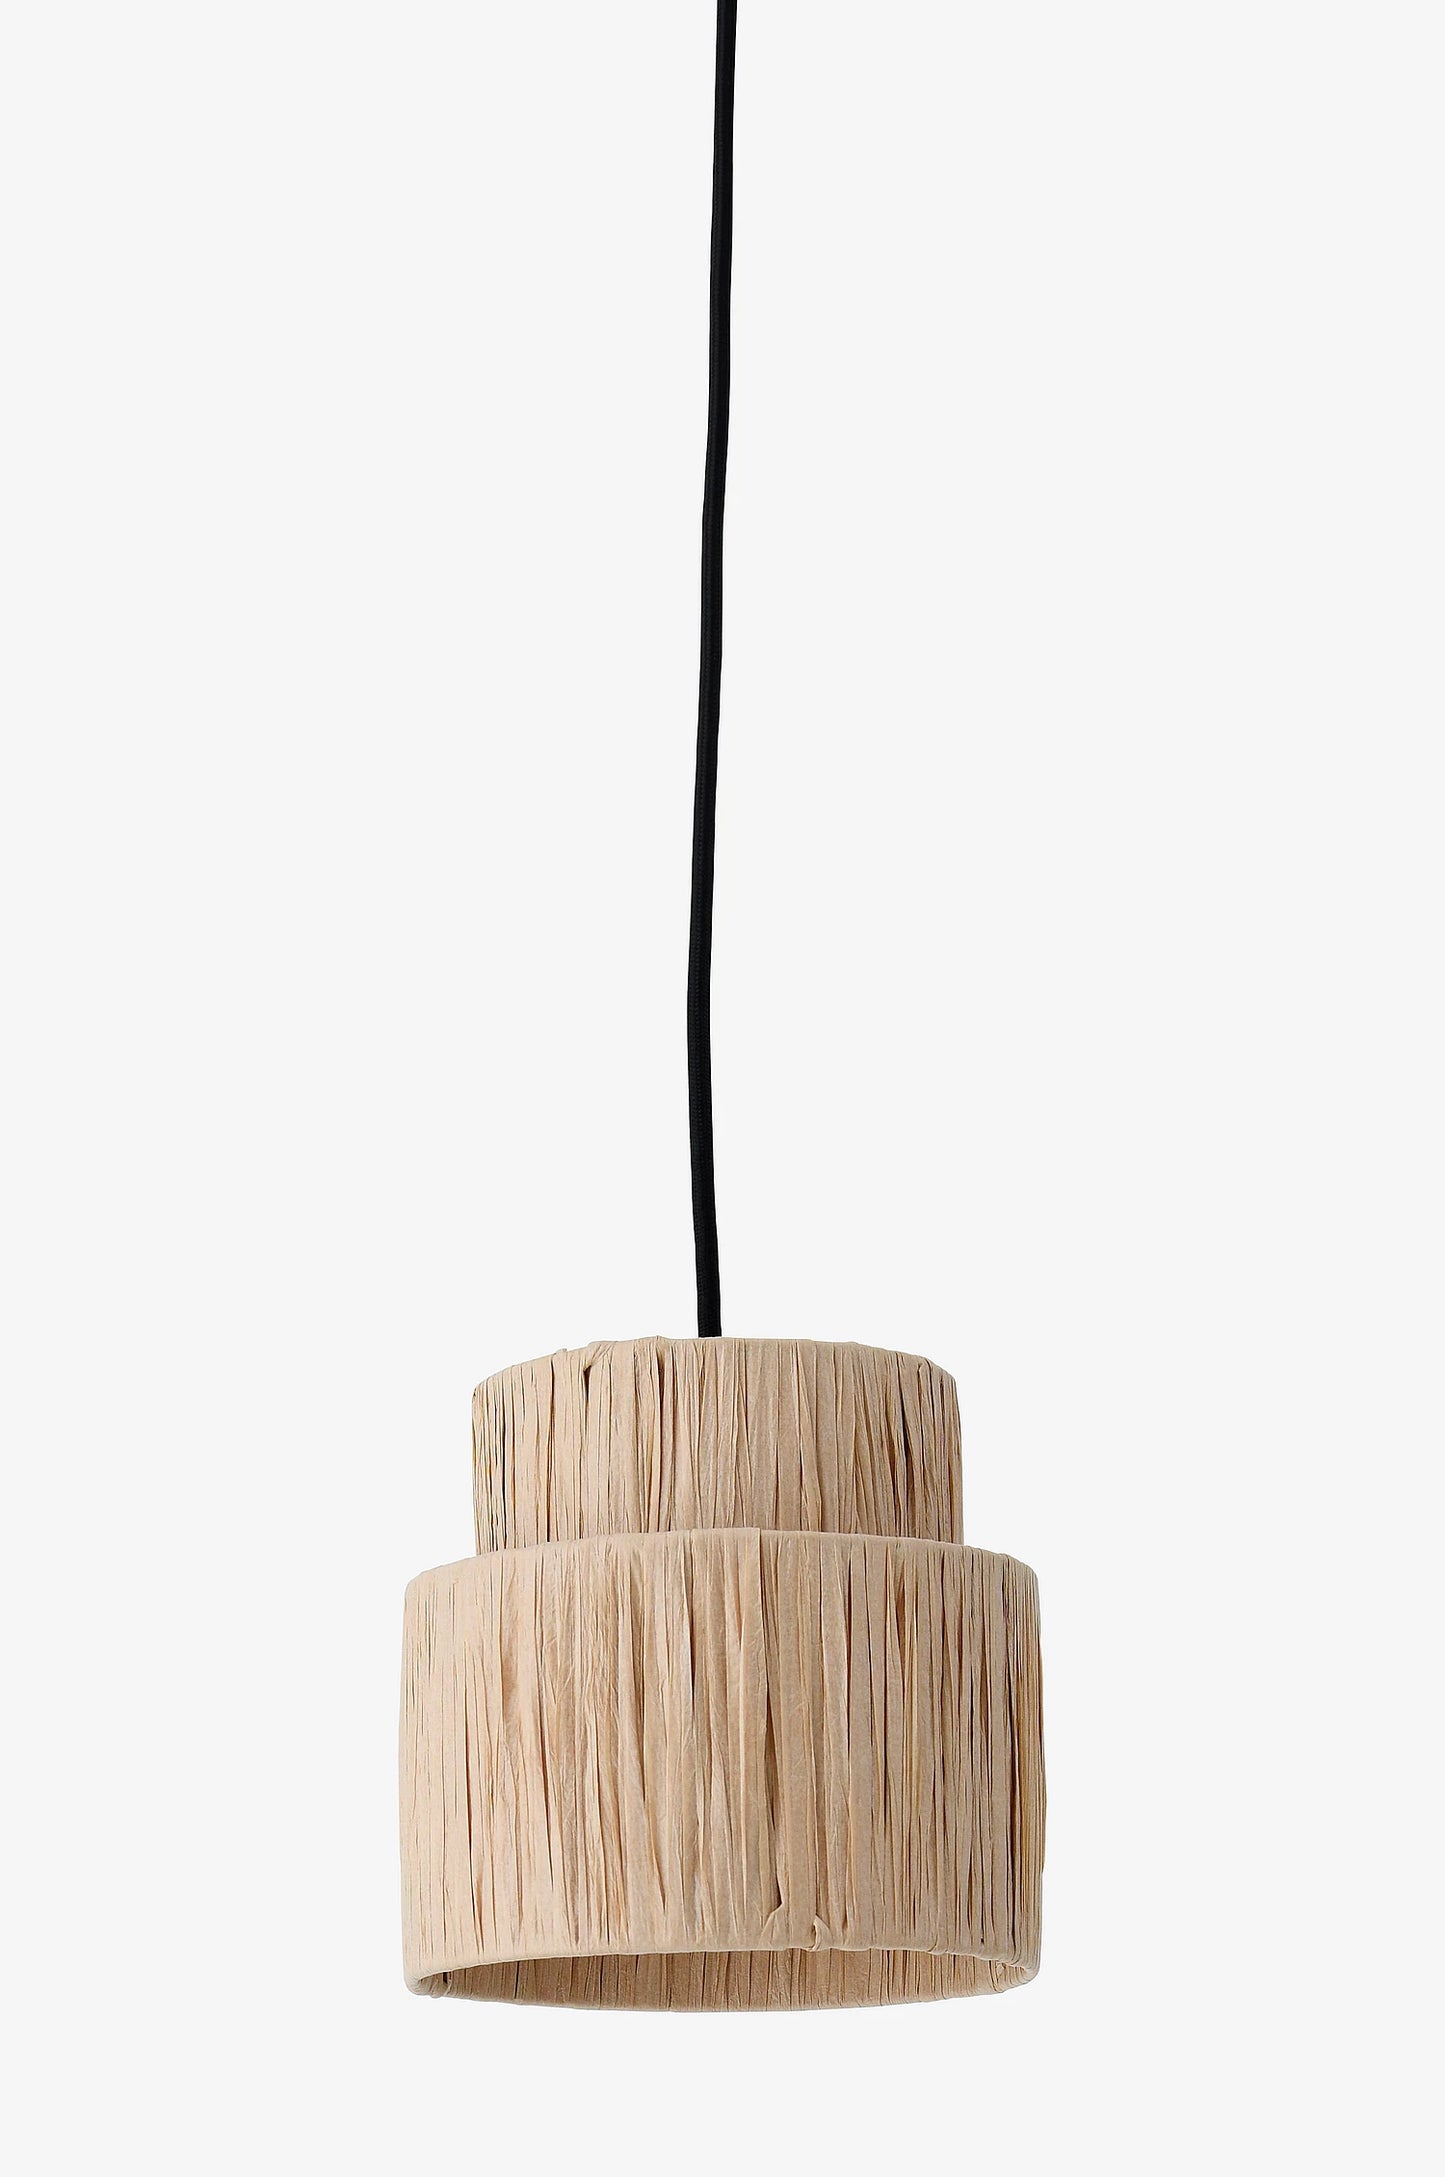 Bamboo Hanging lamp for Living Room | Rattan Pendant light | Cane ceiling light - Anaisha - Akway